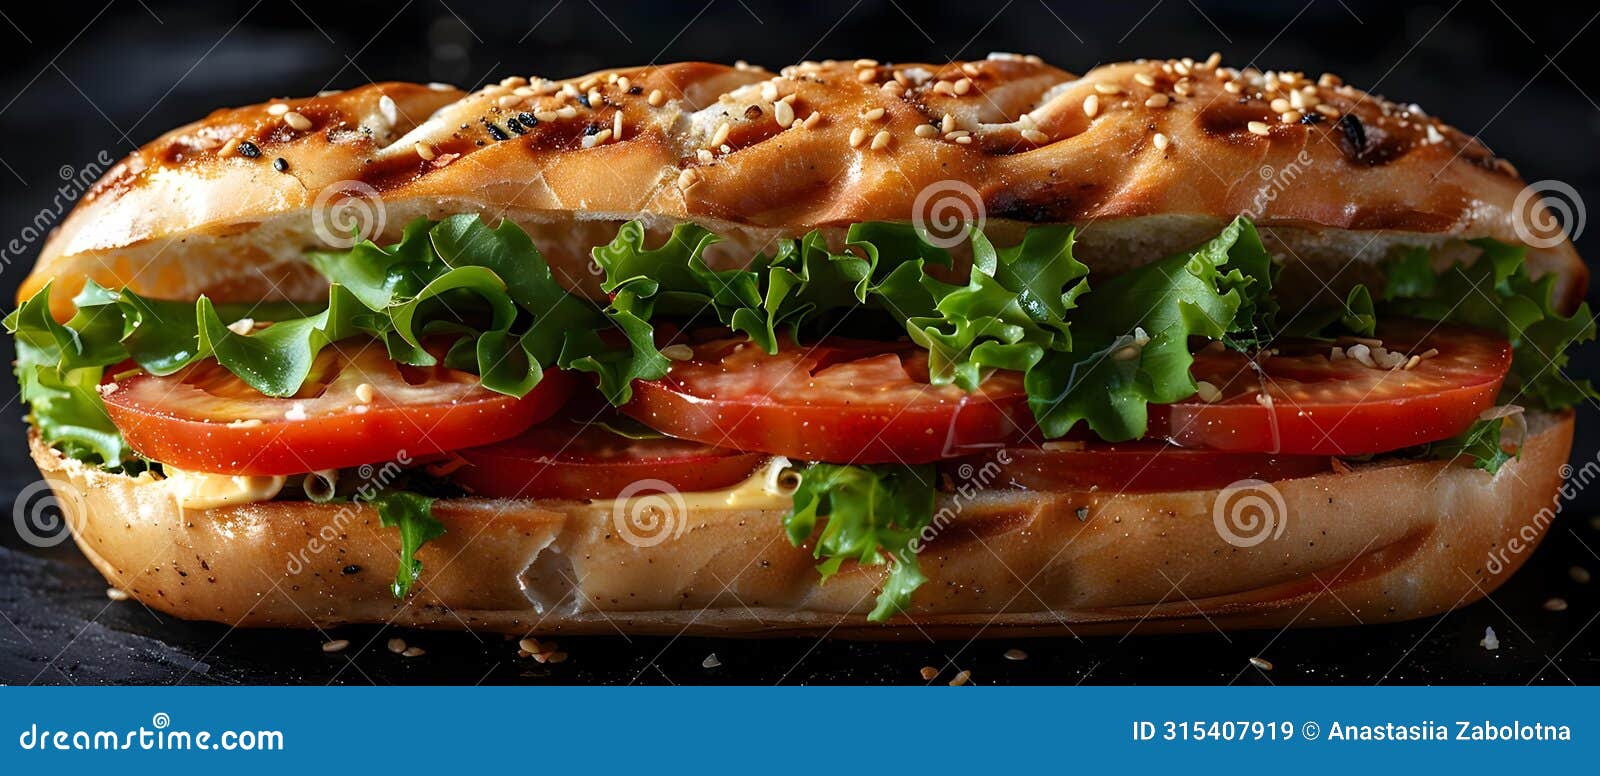 sublime sub sandwich simplicity - a culinary symphony. concept food photography, sandwich art,